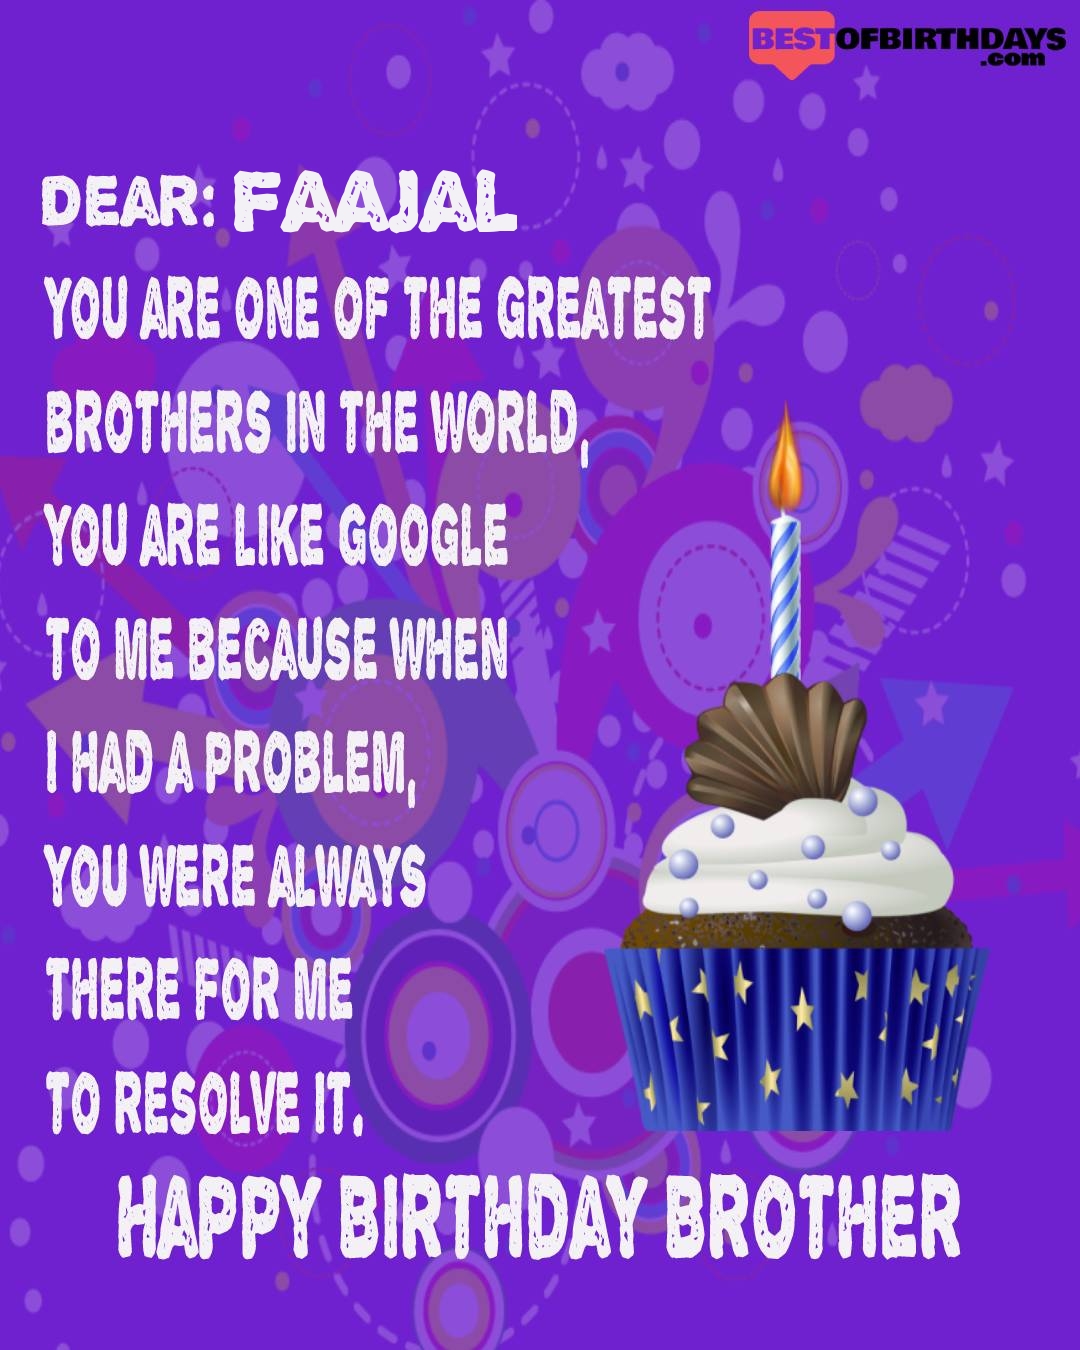 Happy birthday faajal bhai brother bro